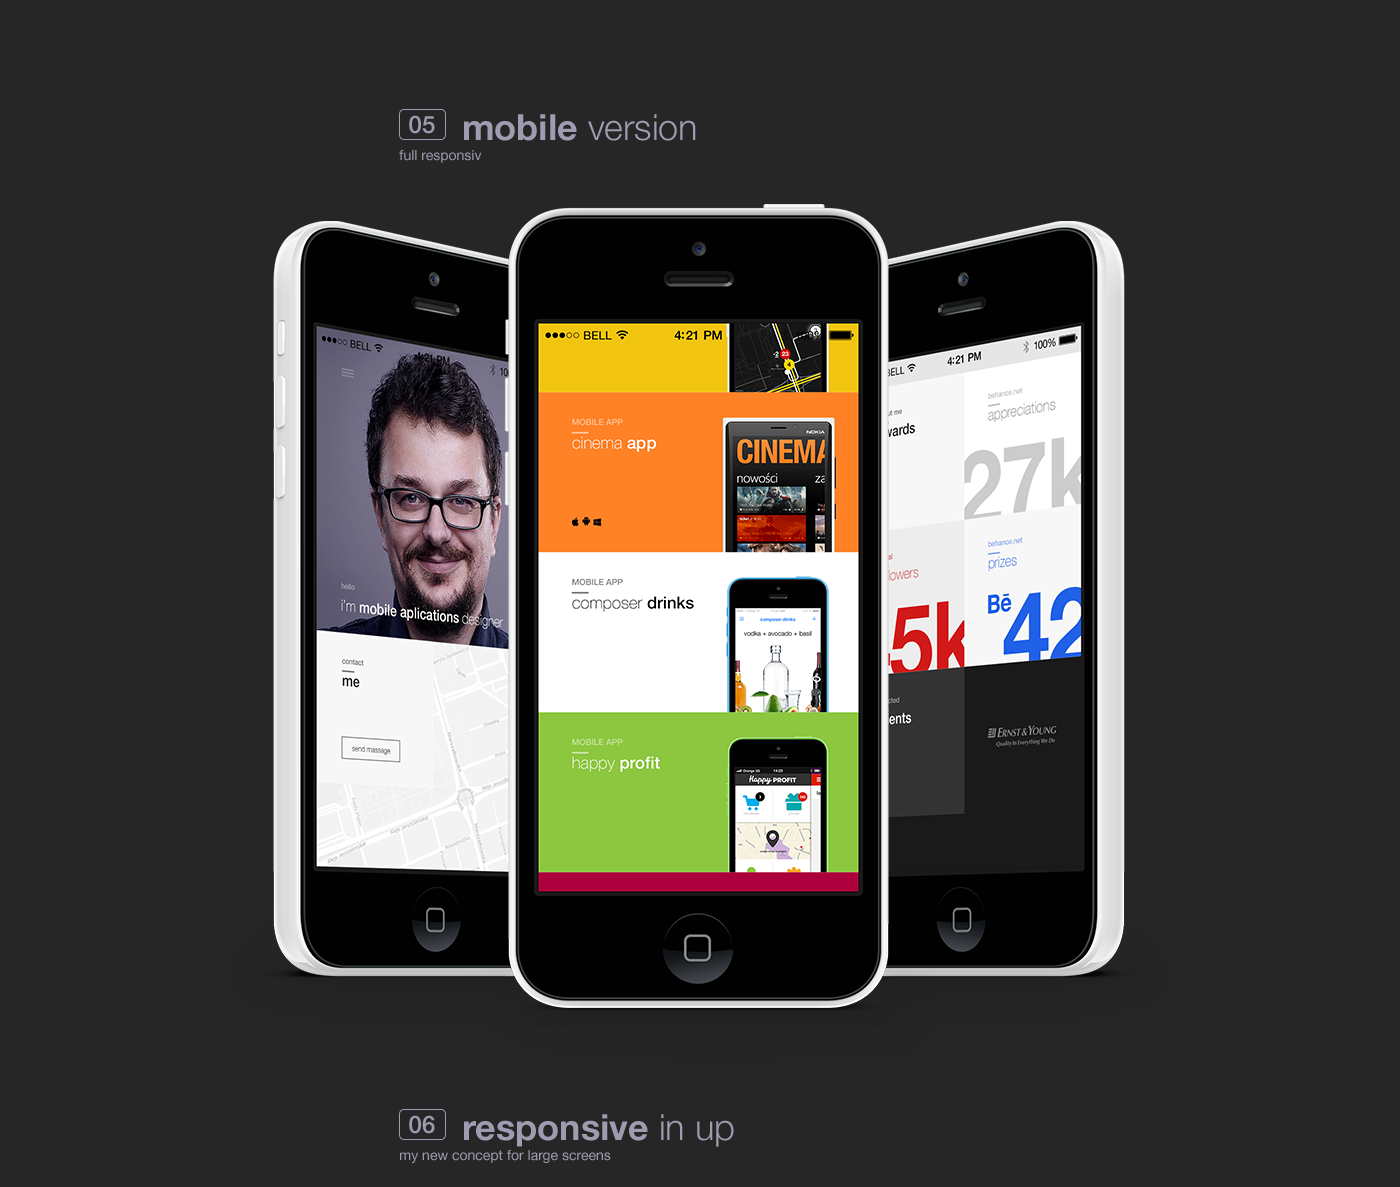 Web www webdesig site portfolio designer mobile